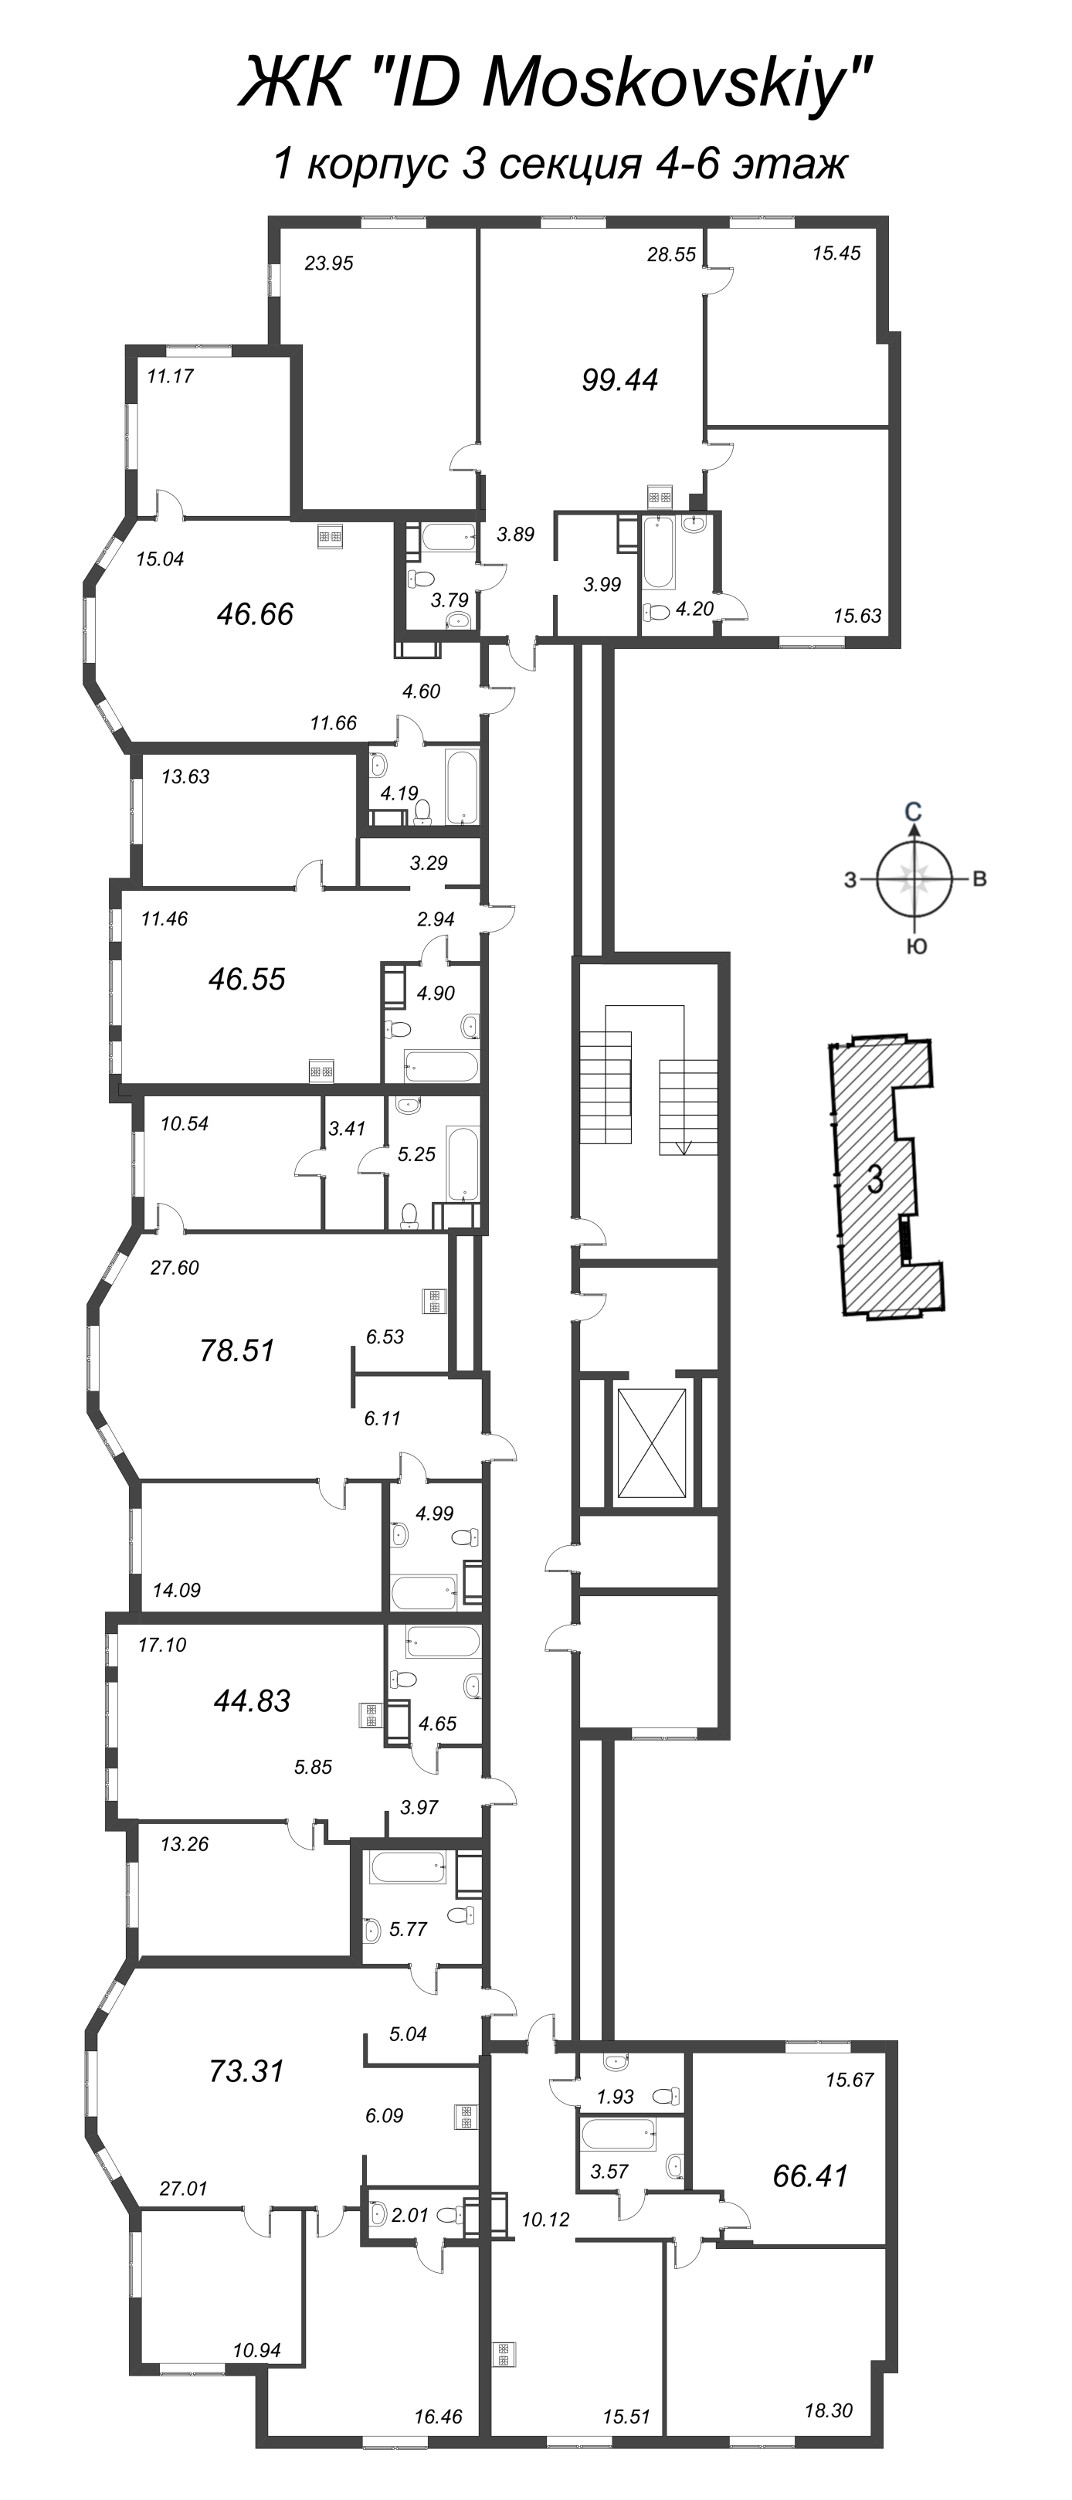 4-комнатная (Евро) квартира, 99.44 м² - планировка этажа